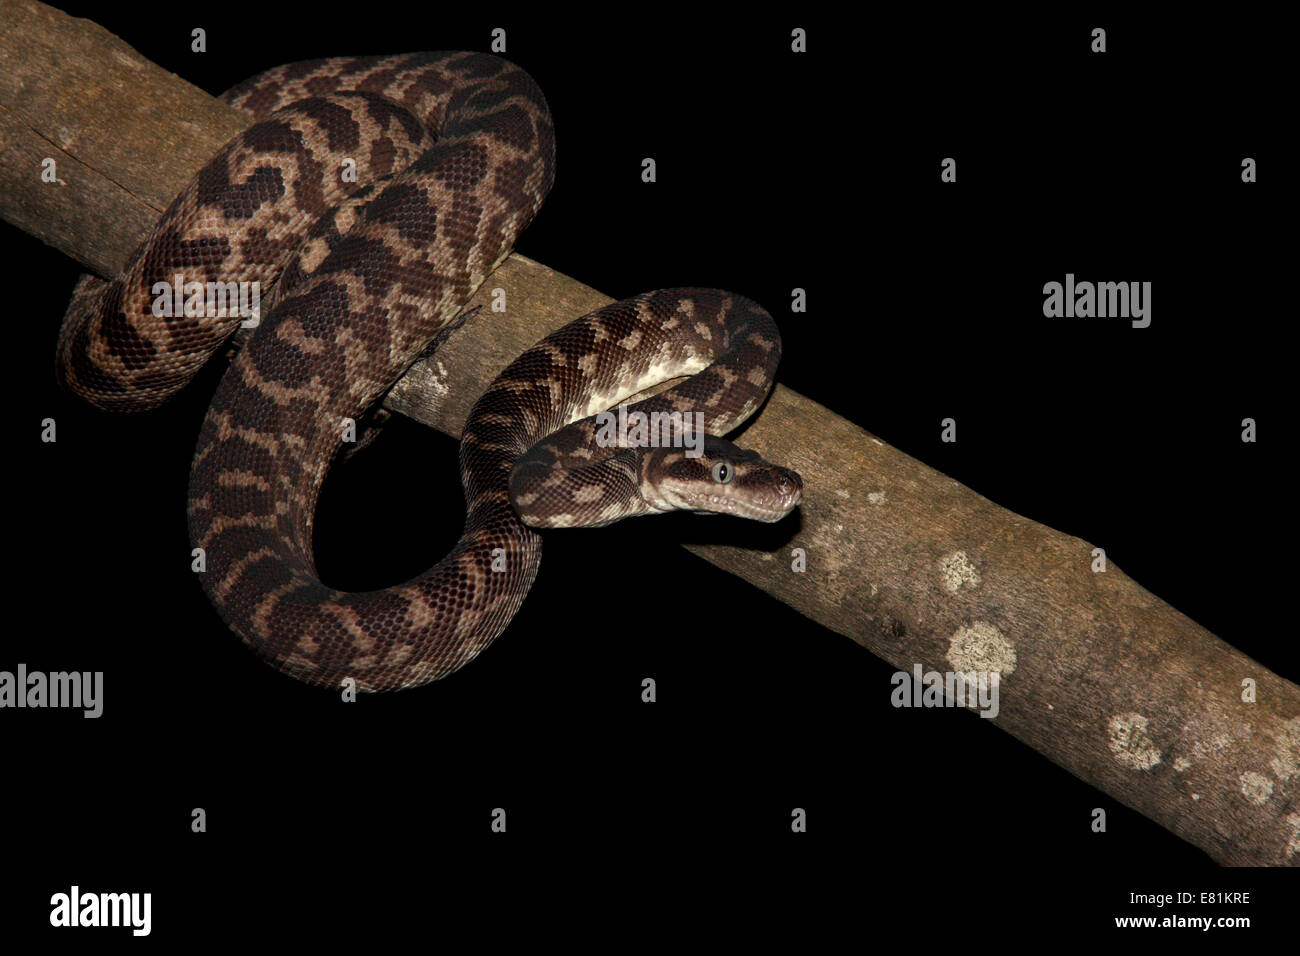 Rough-scalate in Python (Morelia carinata) Foto Stock